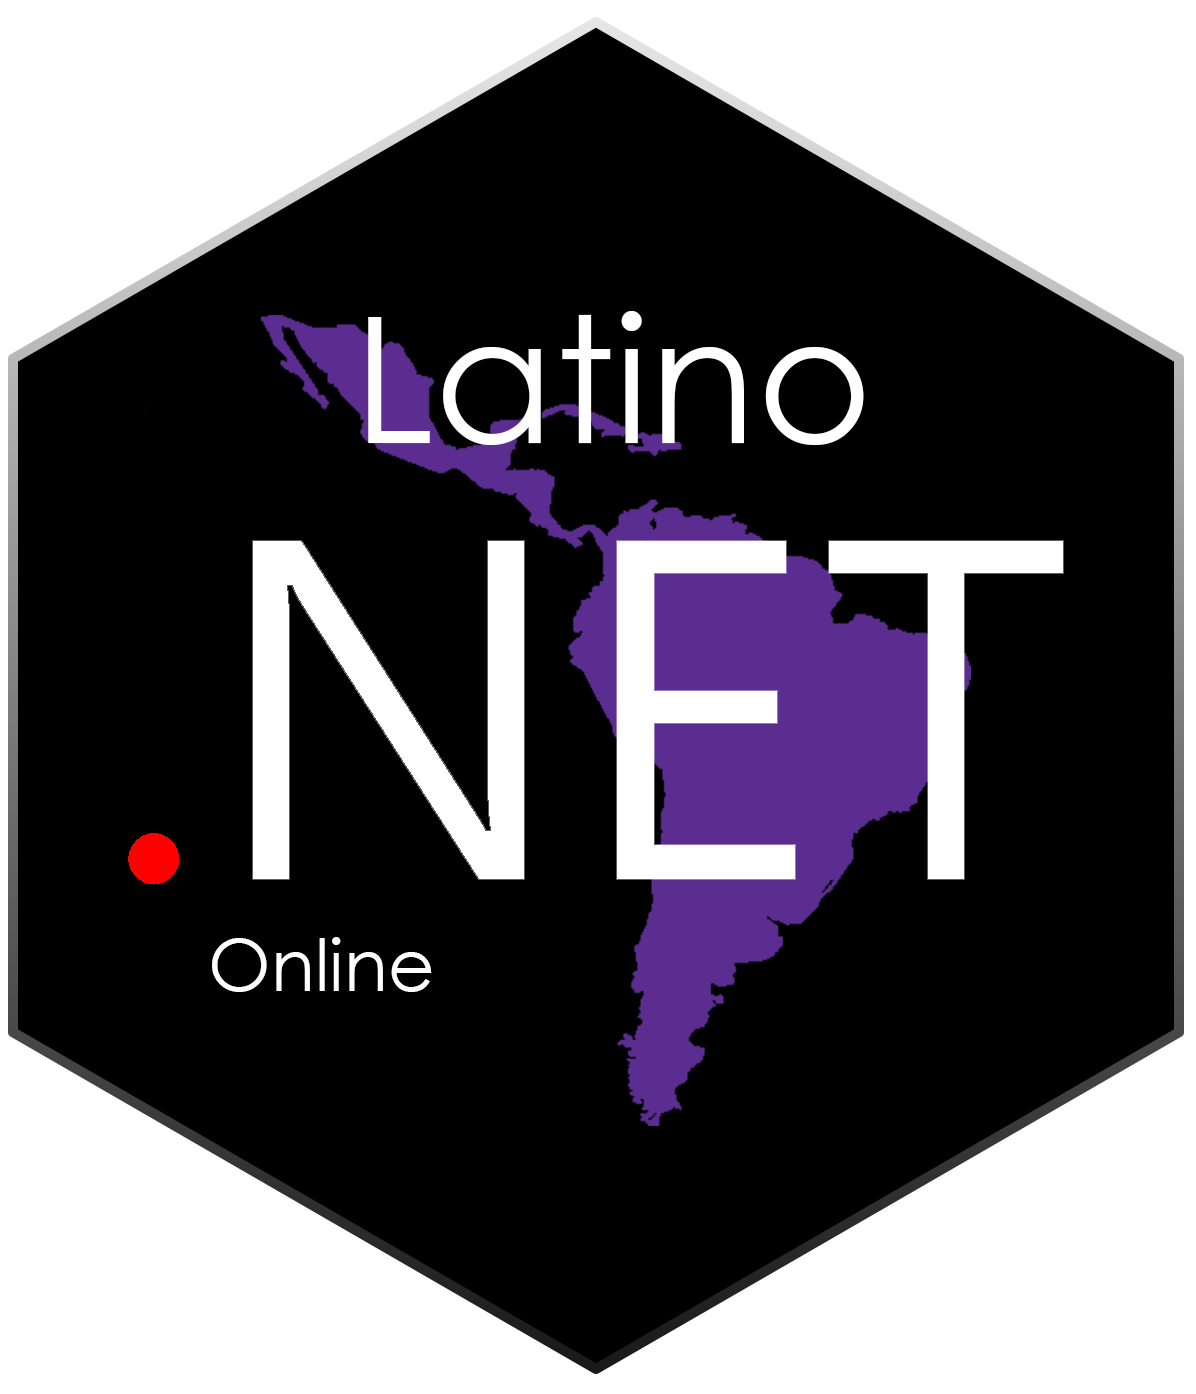 latino net online logo